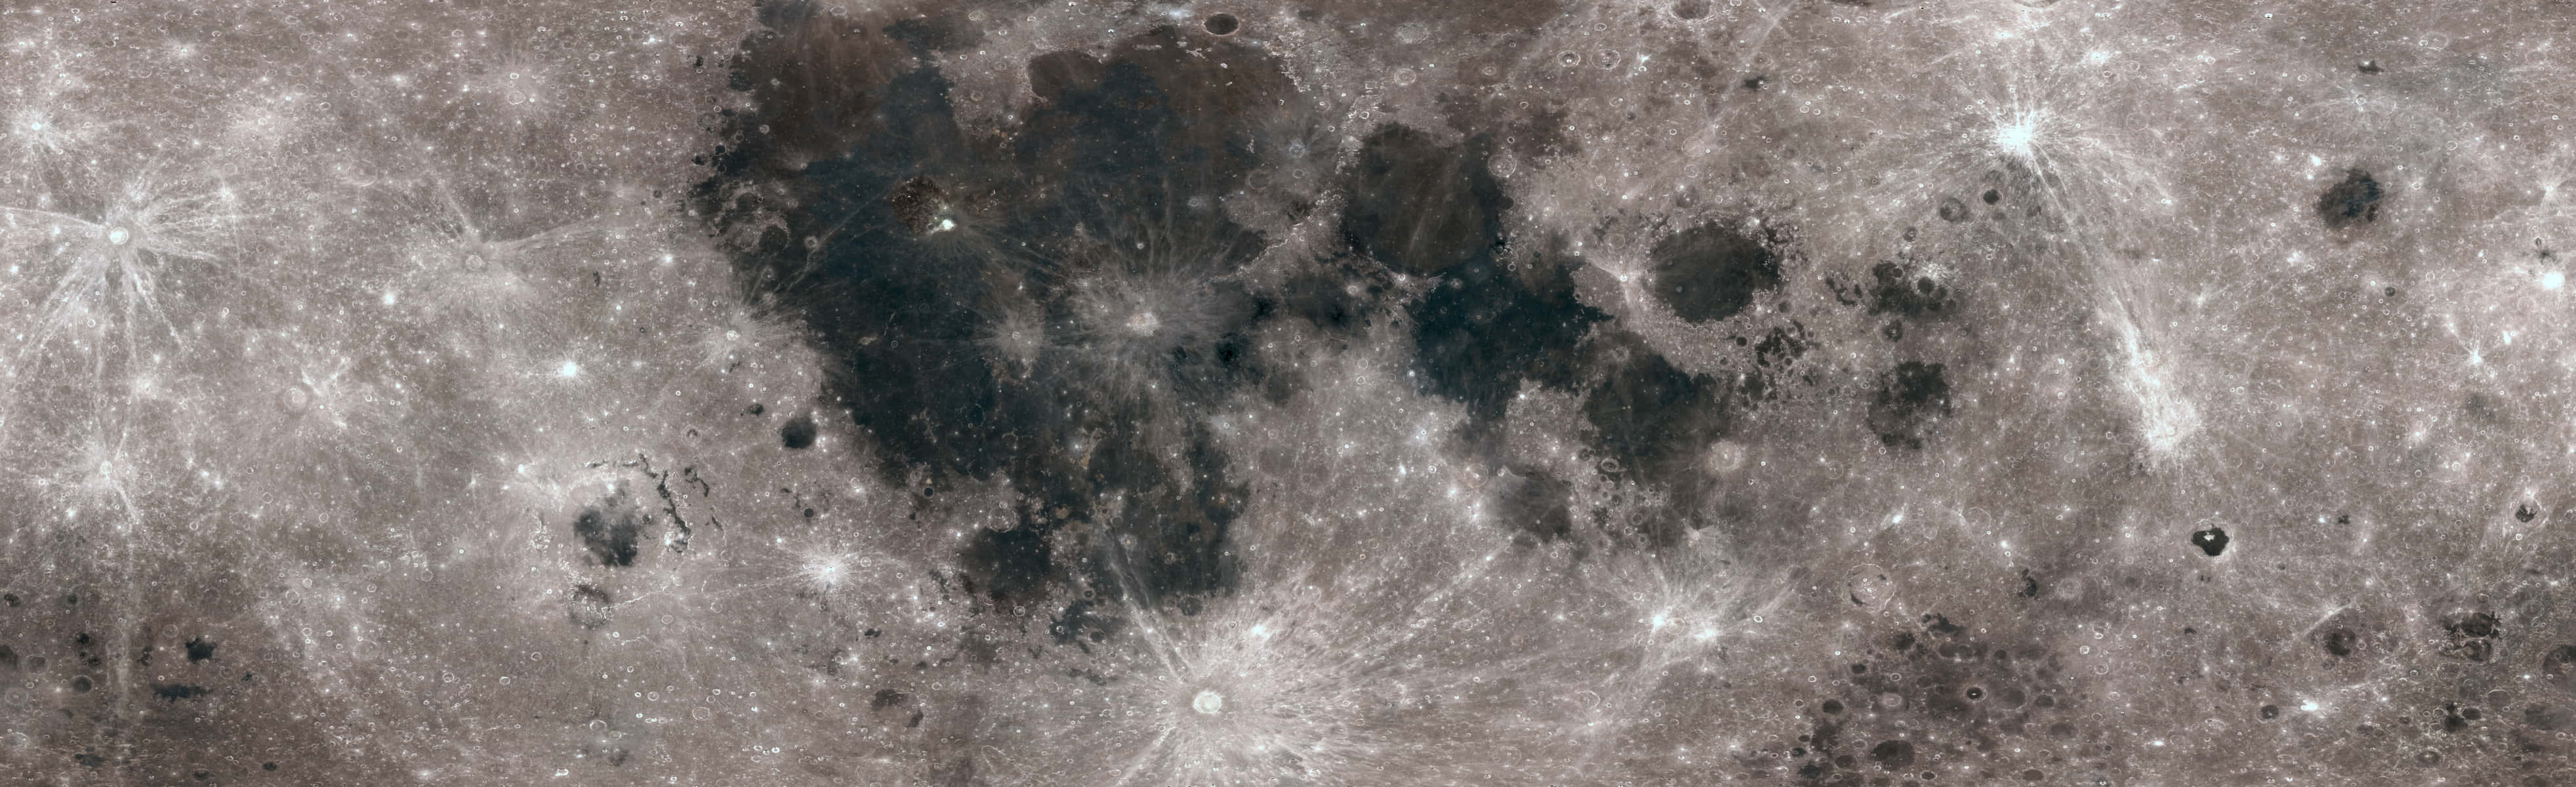 The Illuminated Terrain Of The Lunar Surface Wallpaper